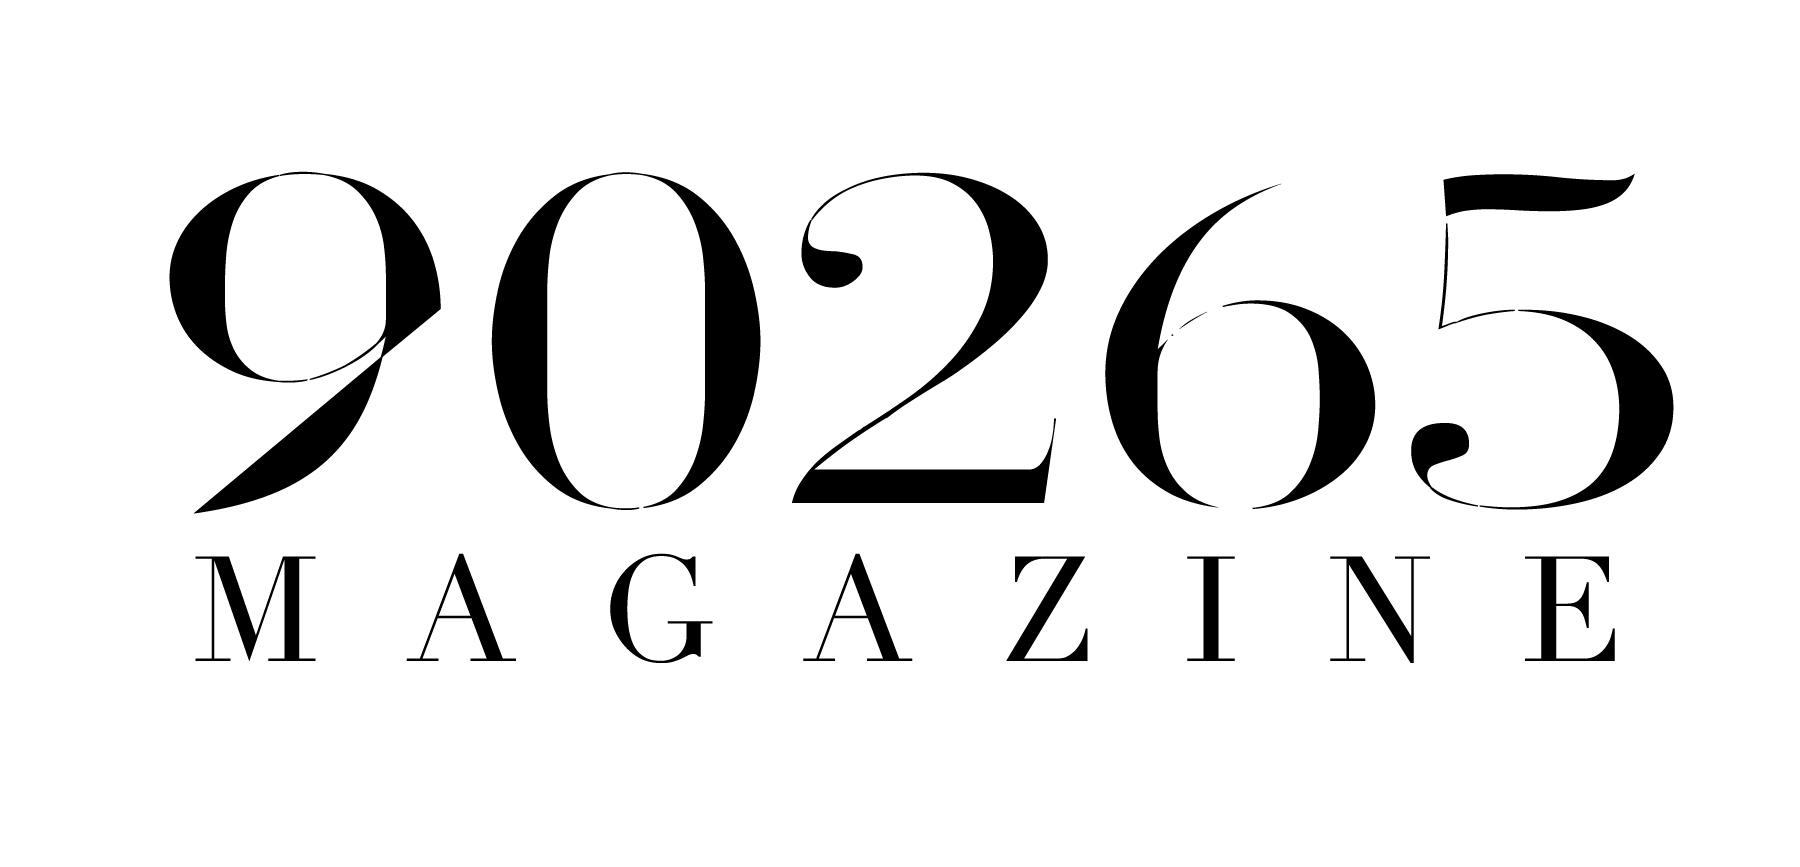 Malibu 90265 Magazine